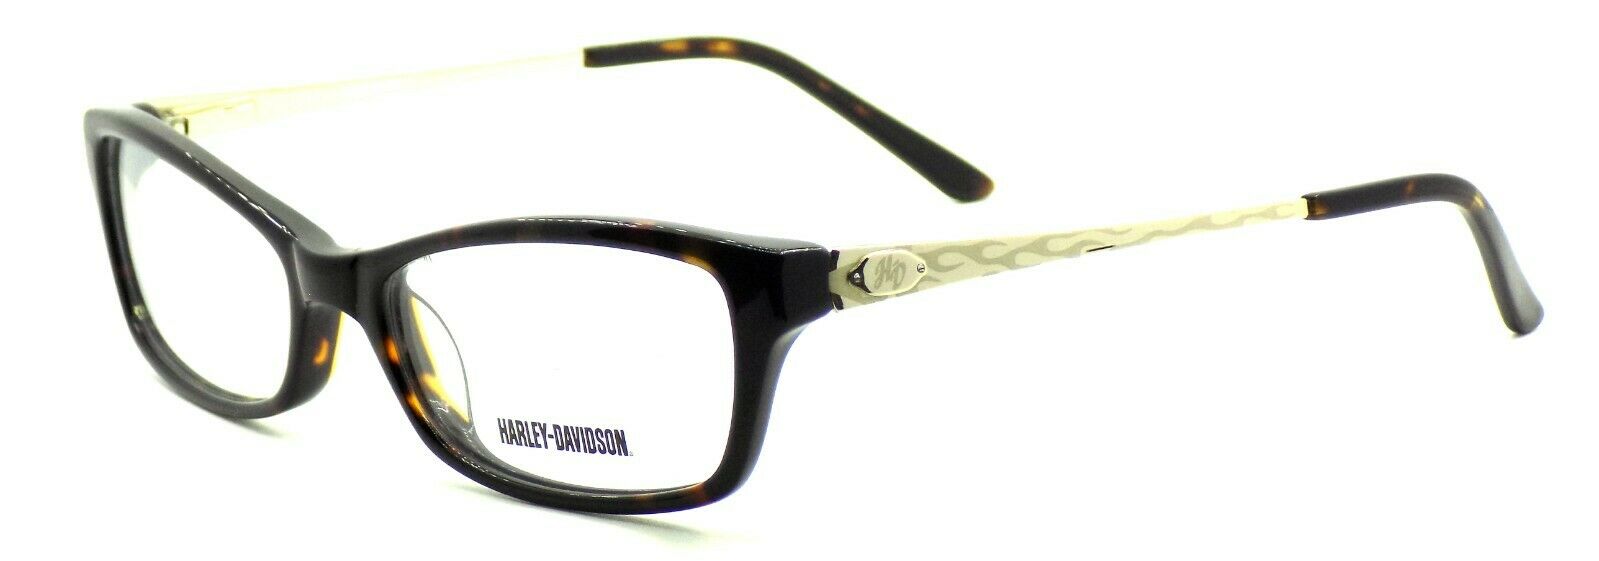 1-Harley Davidson HD509 TO Women's Eyeglasses Frames 52-16-135 Tortoise + CASE-715583605268-IKSpecs